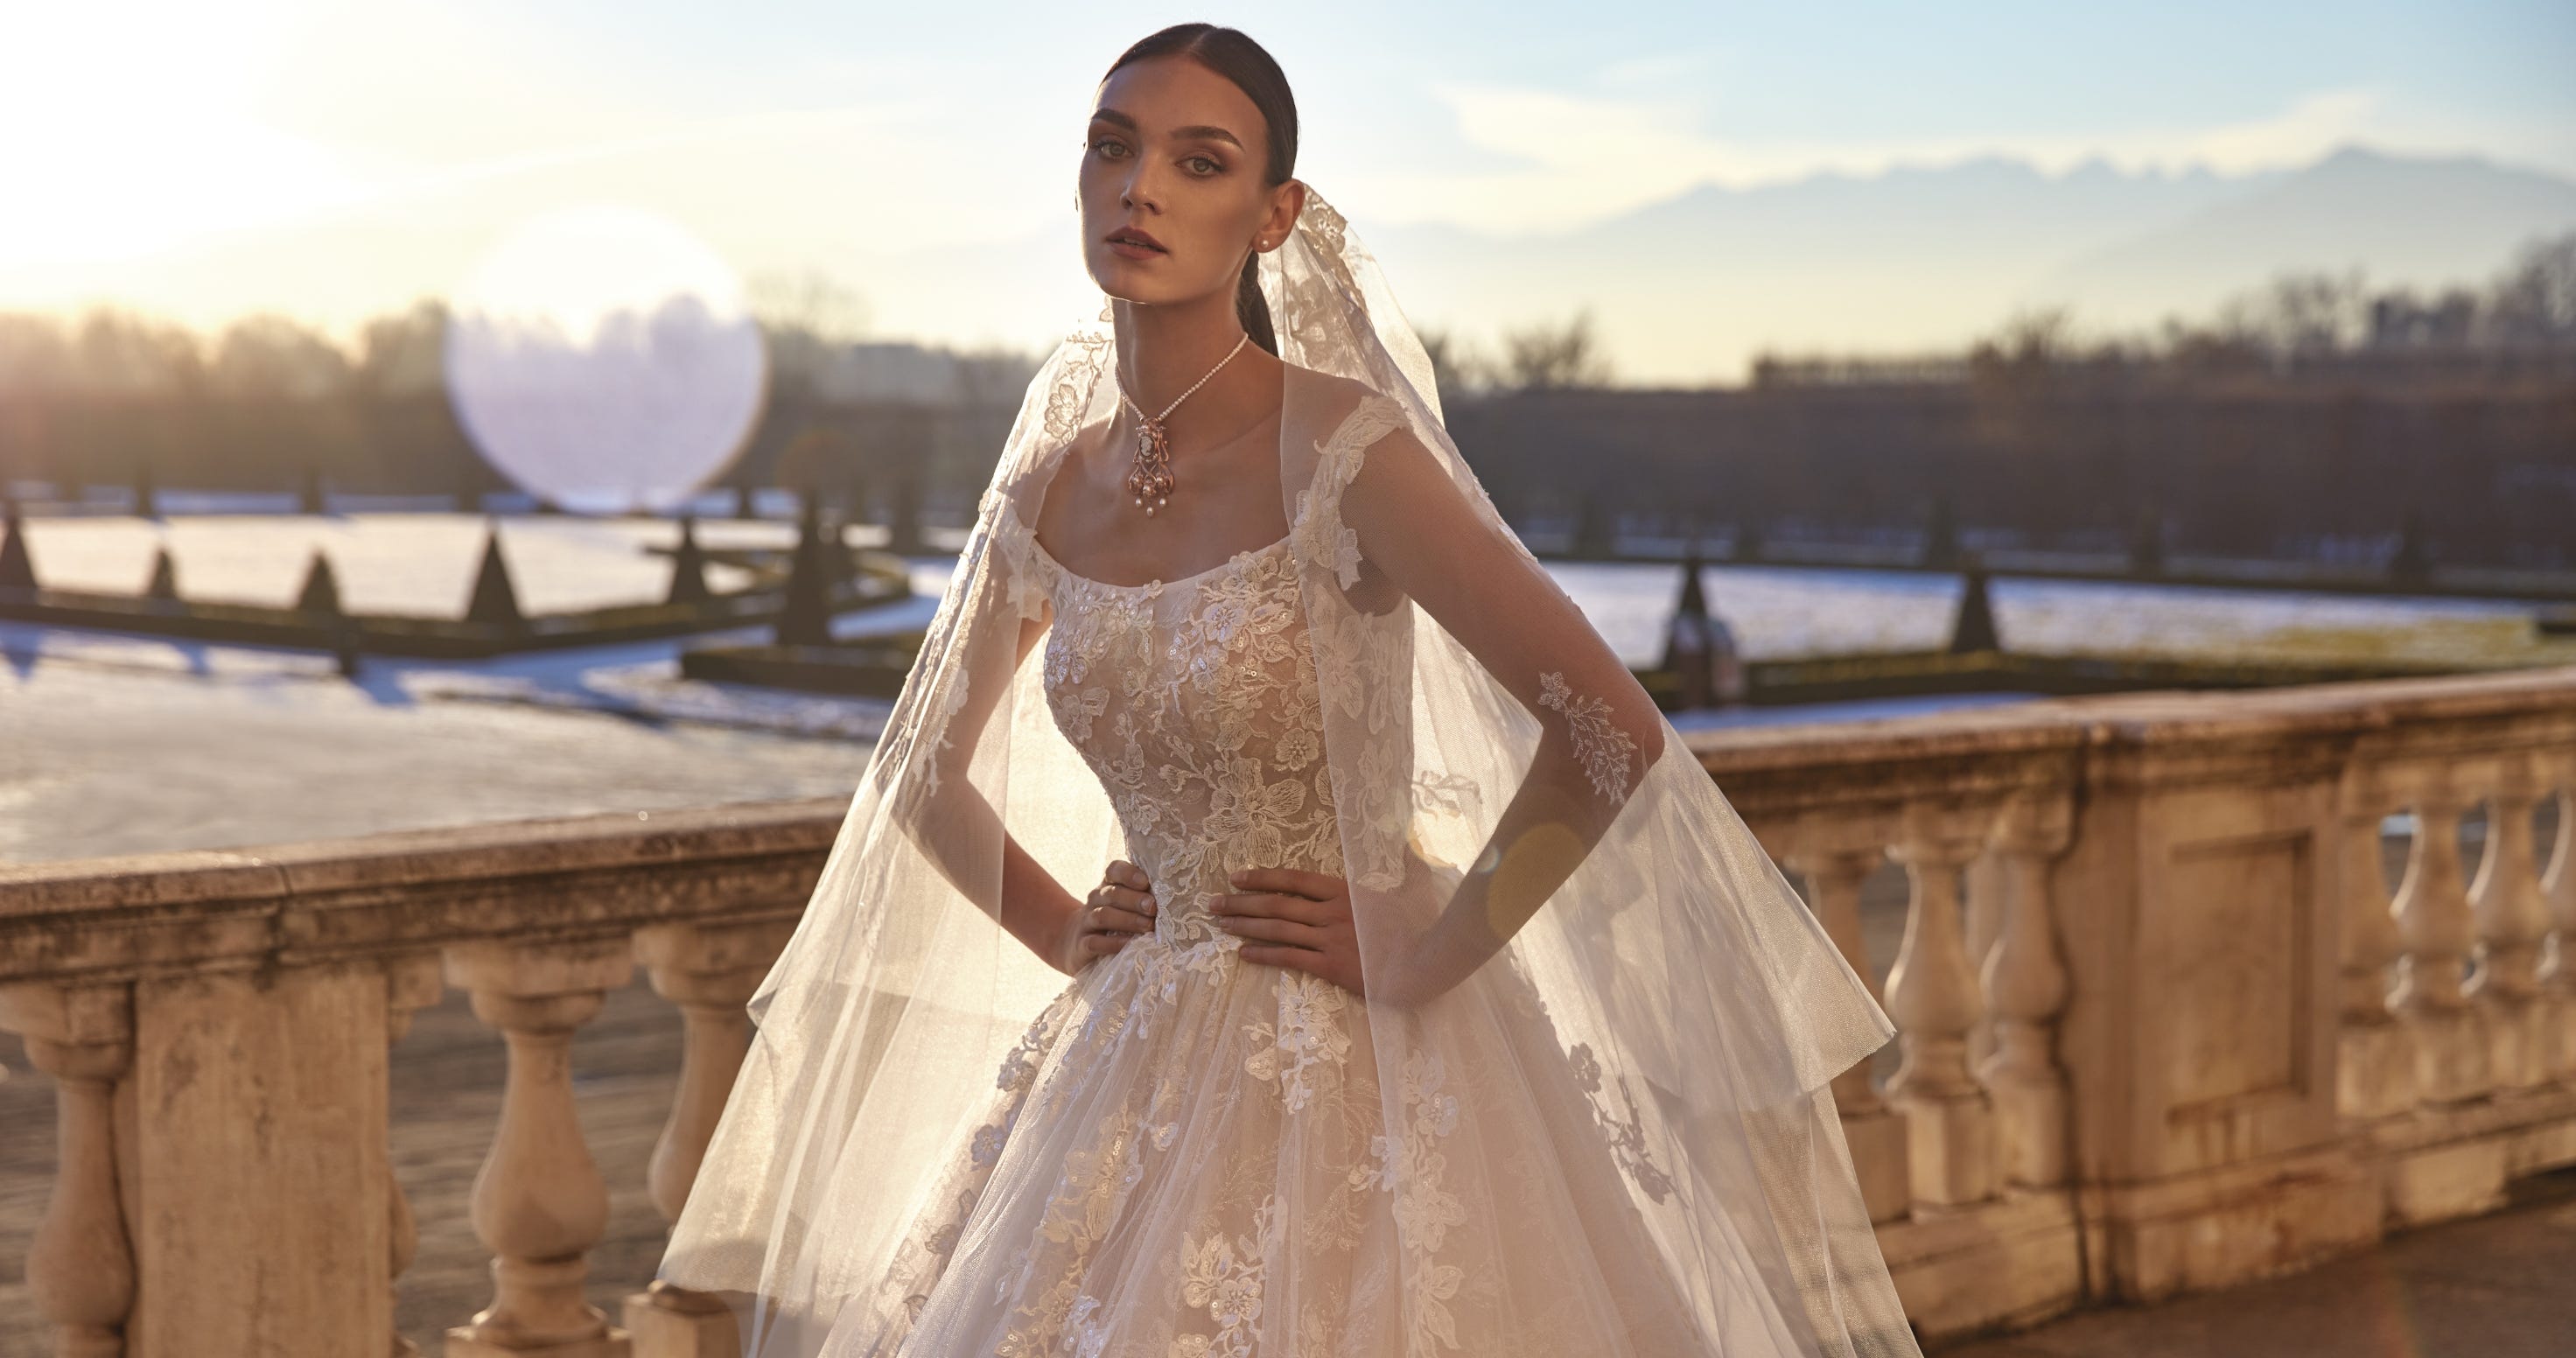 spanish inspired wedding dress,white long gown for wedding,